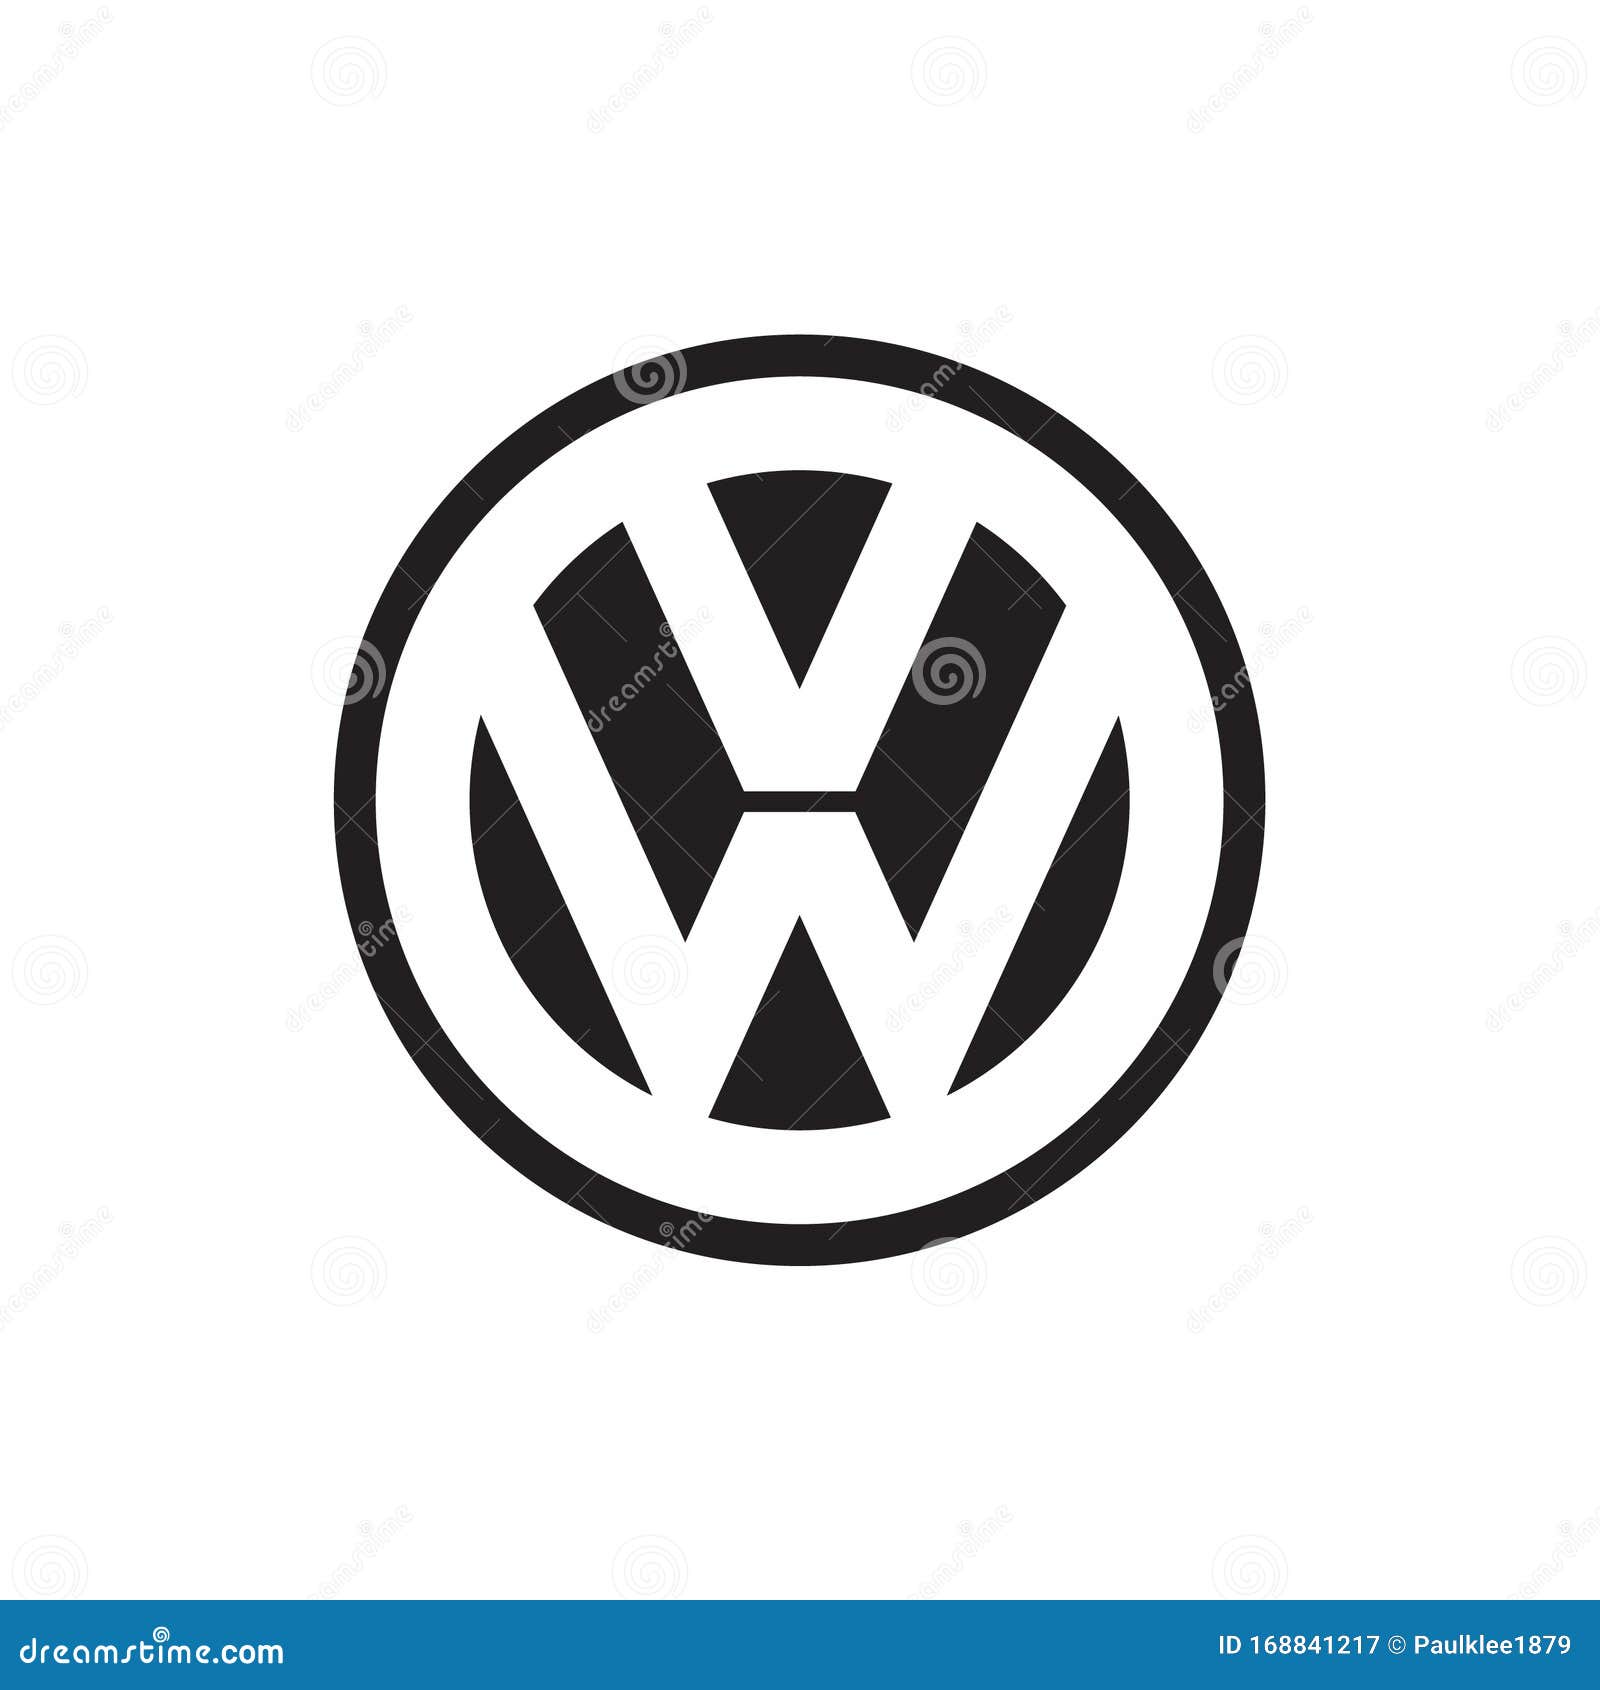 Volkswagen logo brand car symbol with name blue Vector Image, logo  volkswagen